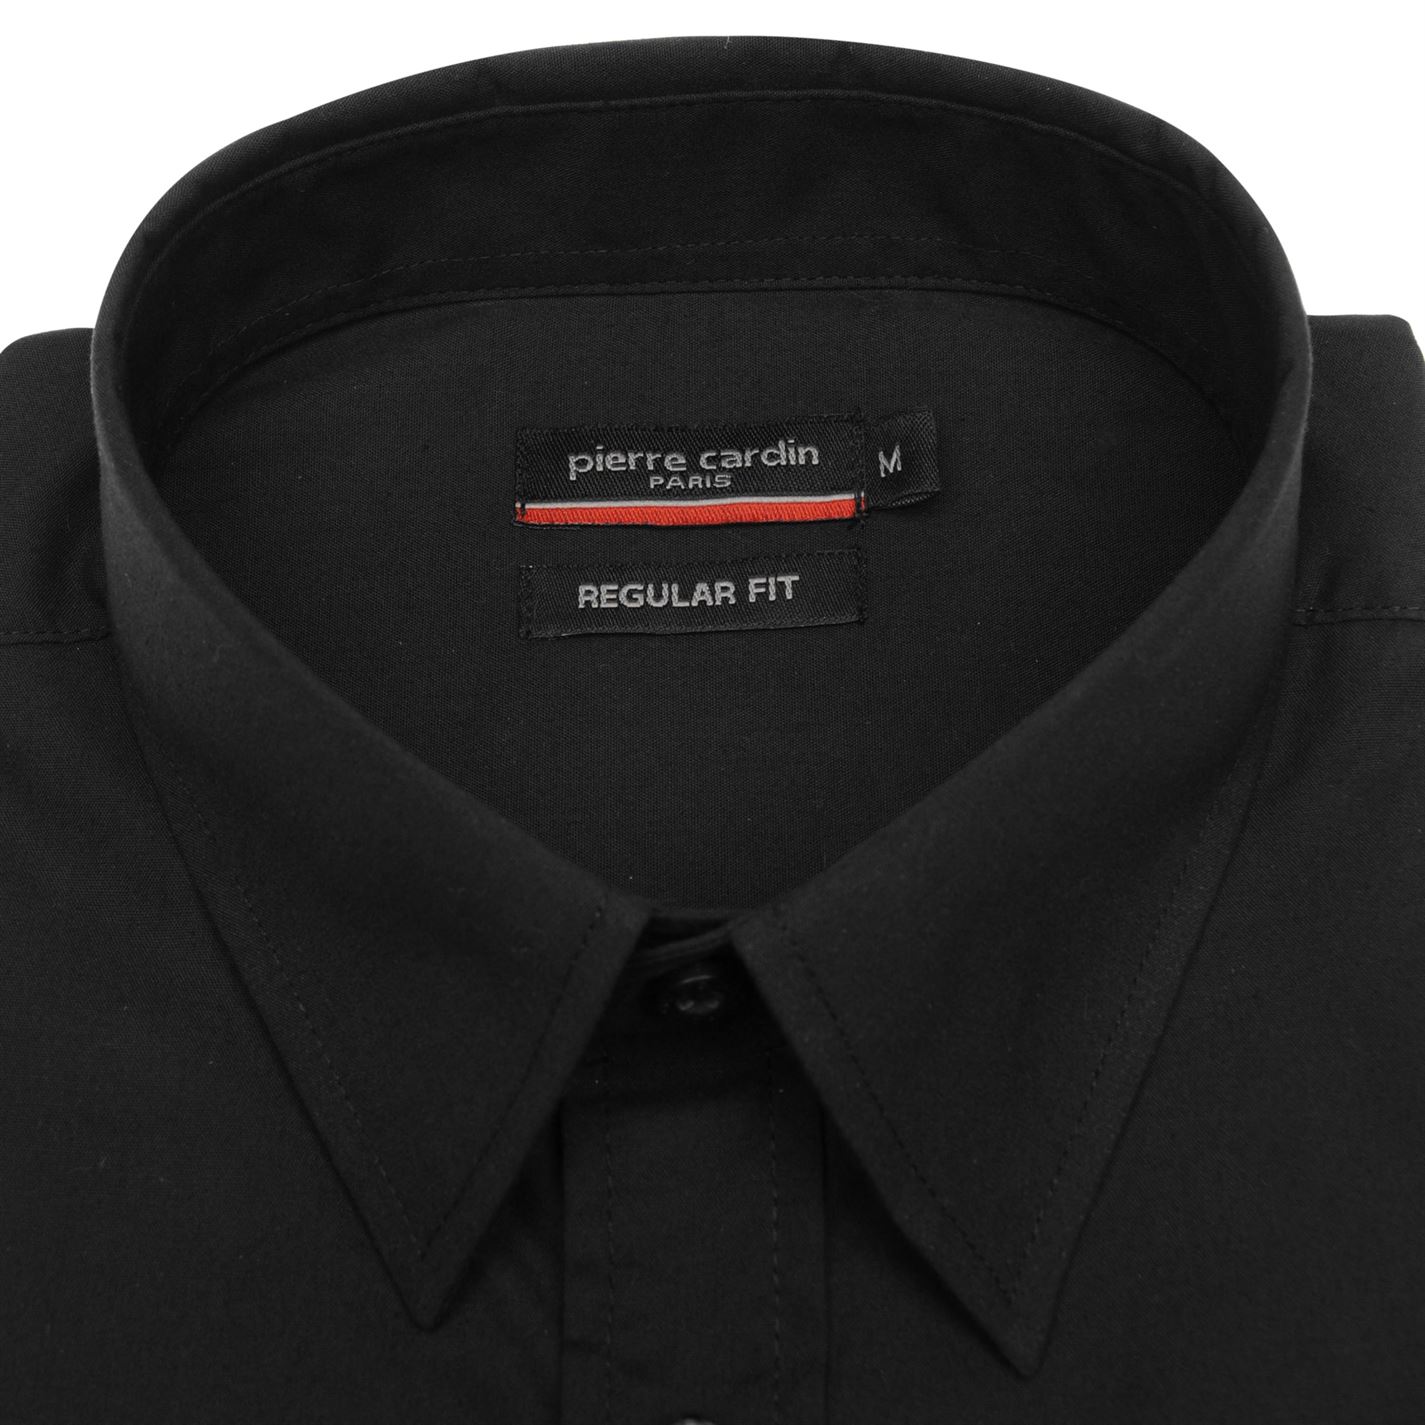 Pierre Cardin Mens Long Sleeve Shirt Top Casual Clothing Wear | eBay